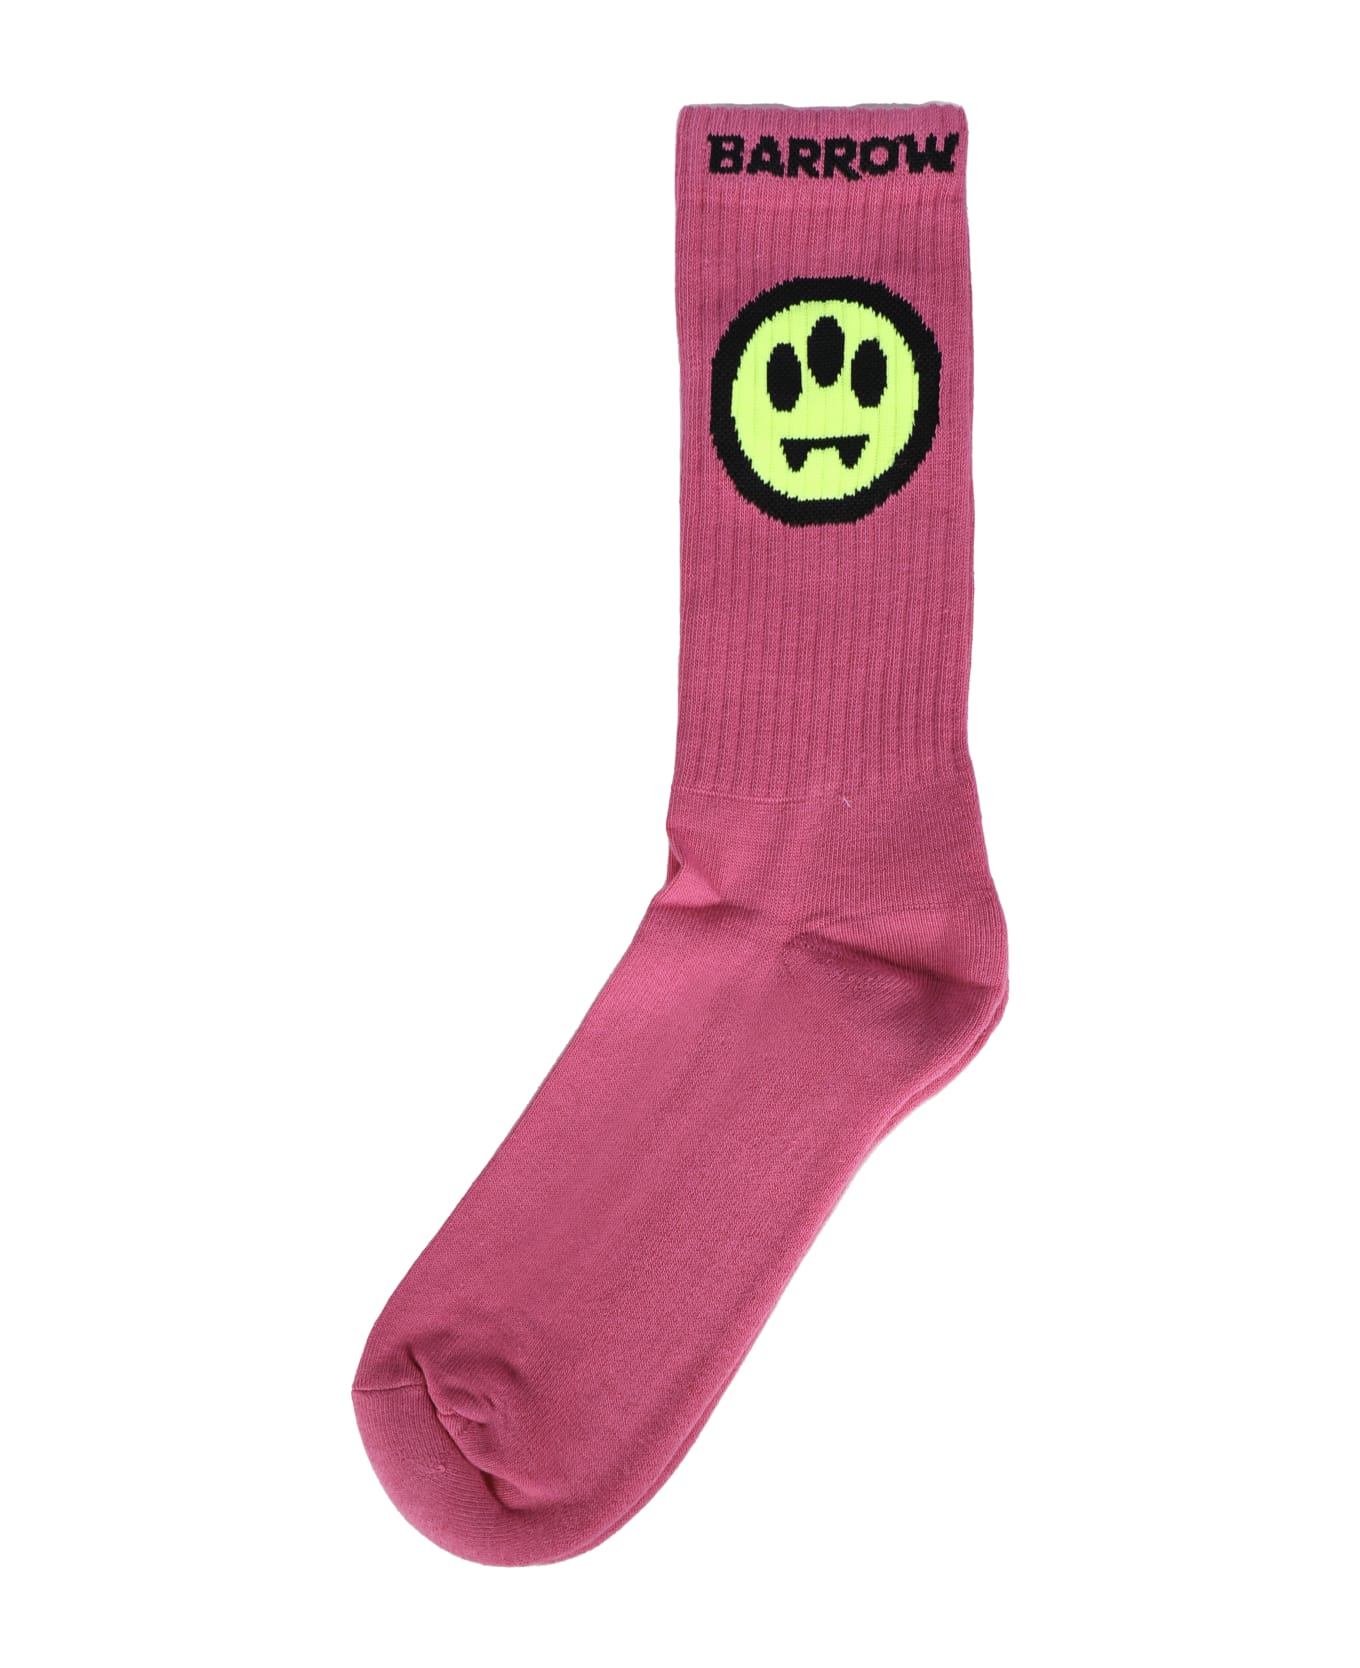 Barrow Logo Socks - Hot pink